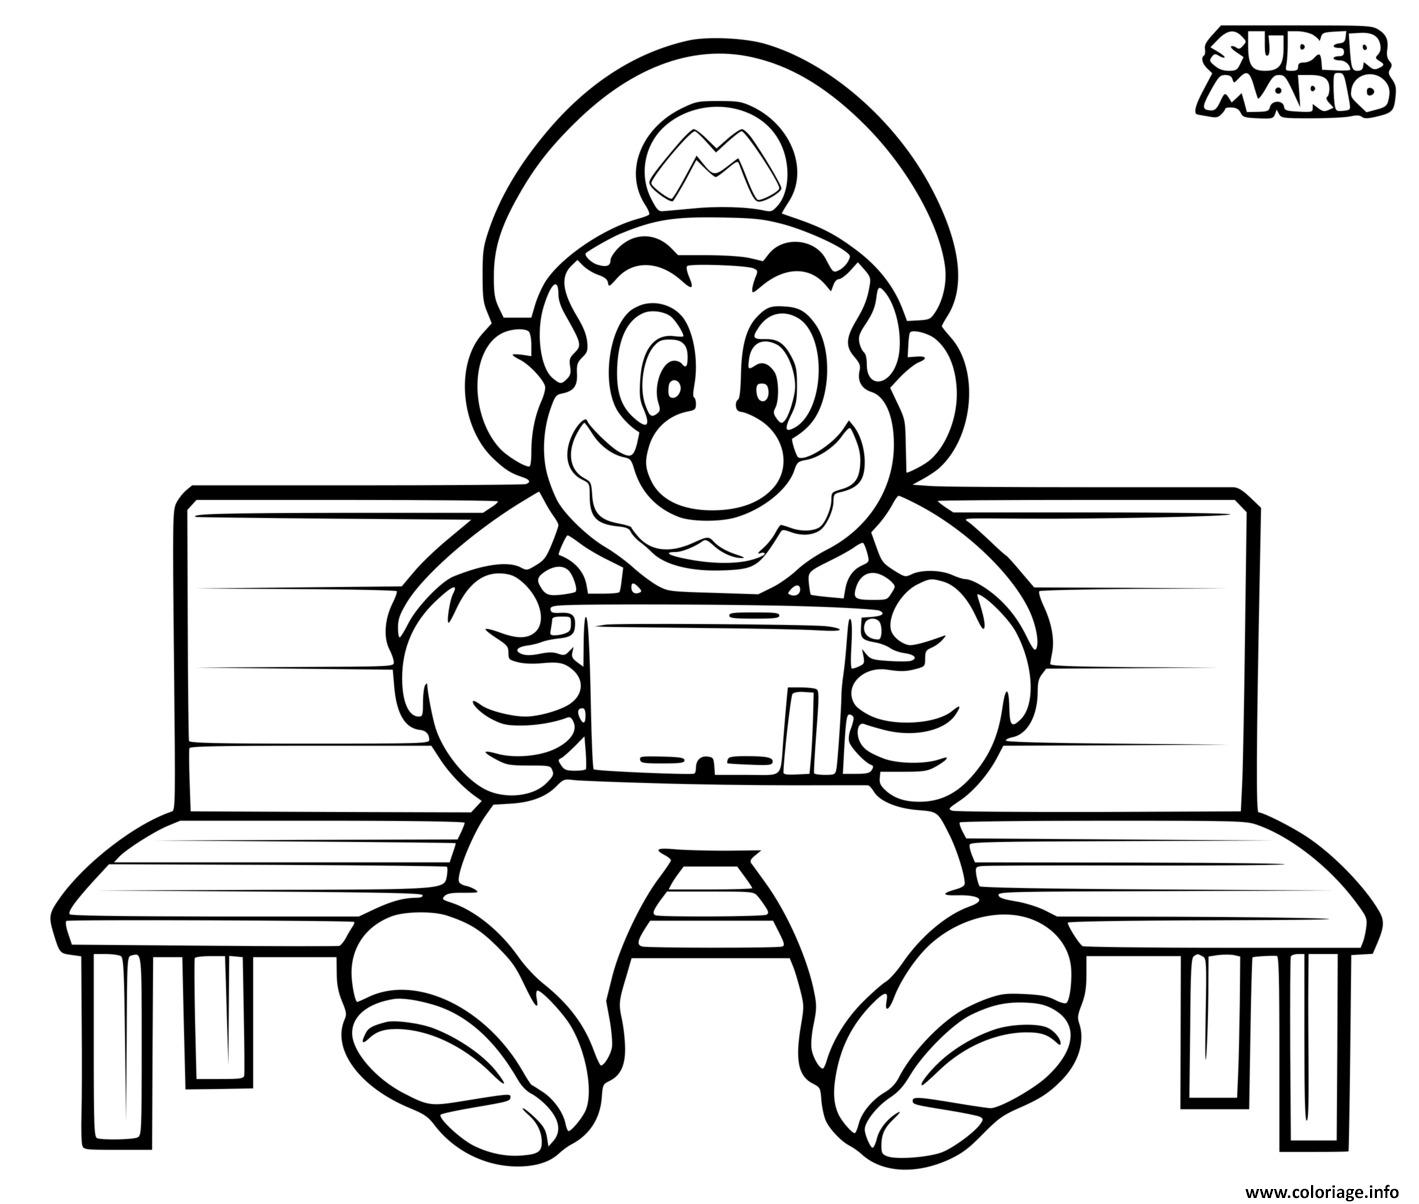 Coloriage Super Mario Bros Joue A La Nintendo Switch Dessin à Imprimer